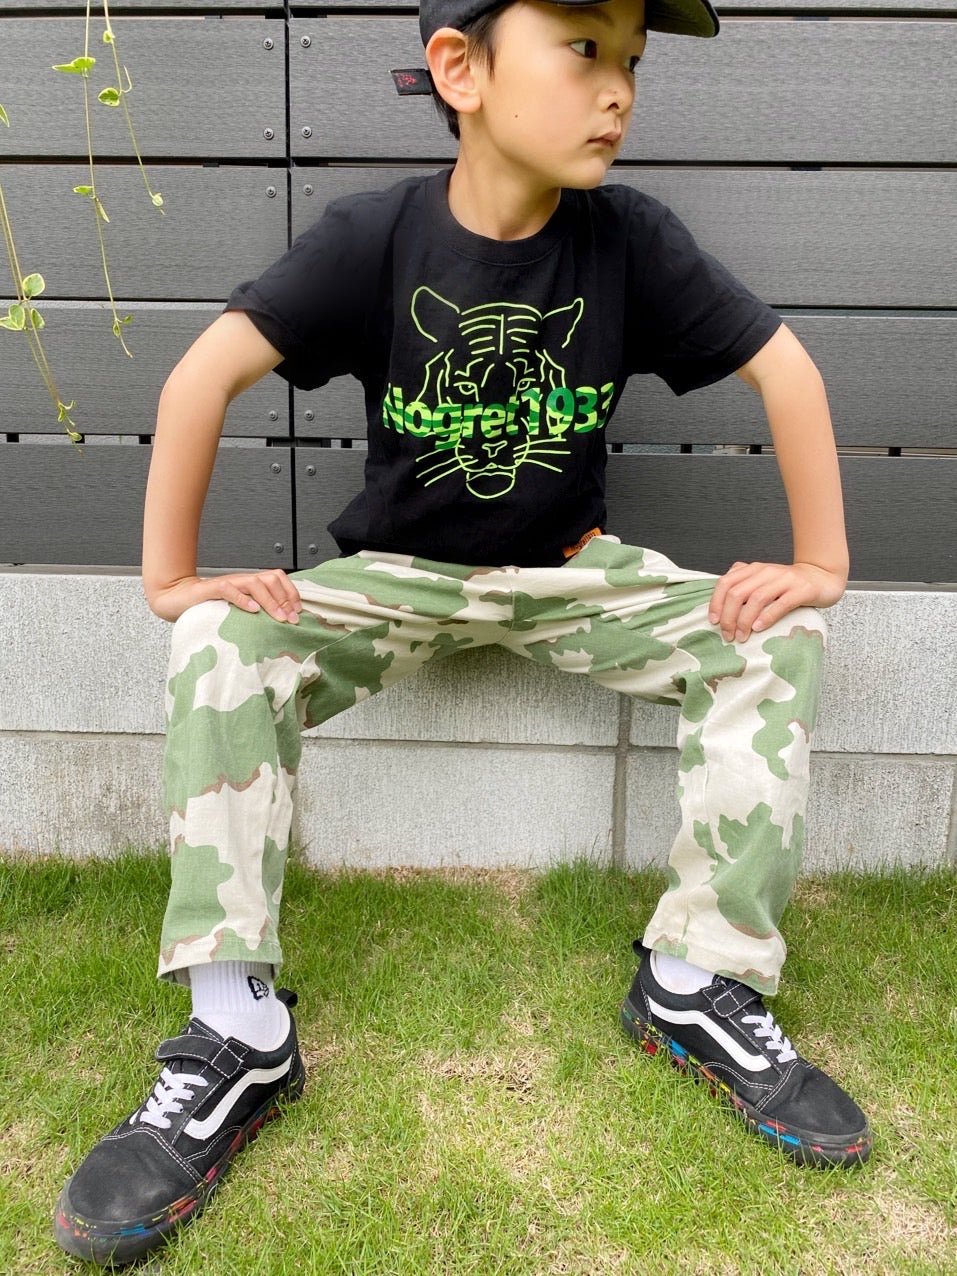 T-shirt model TIGER(BLACK/GREEN)